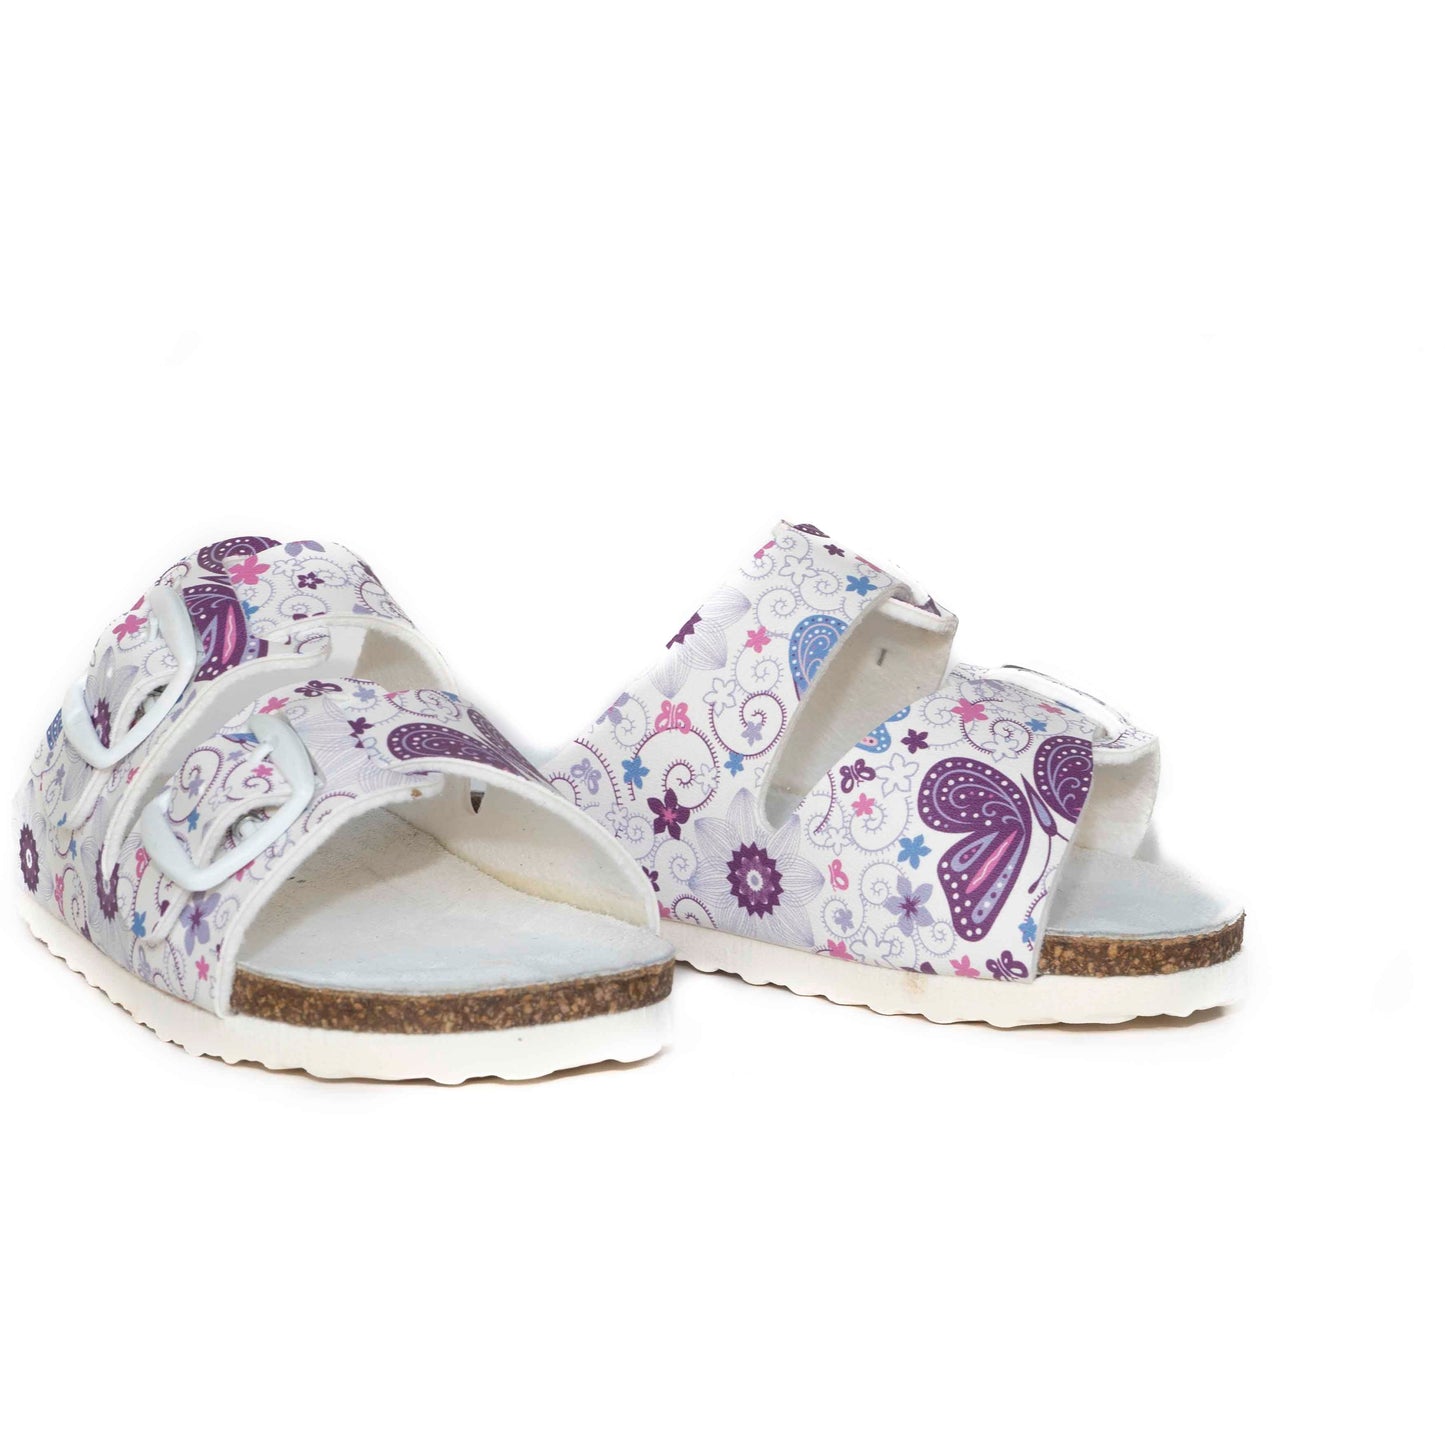 orthopedic older girls sandals : T94: color white purple